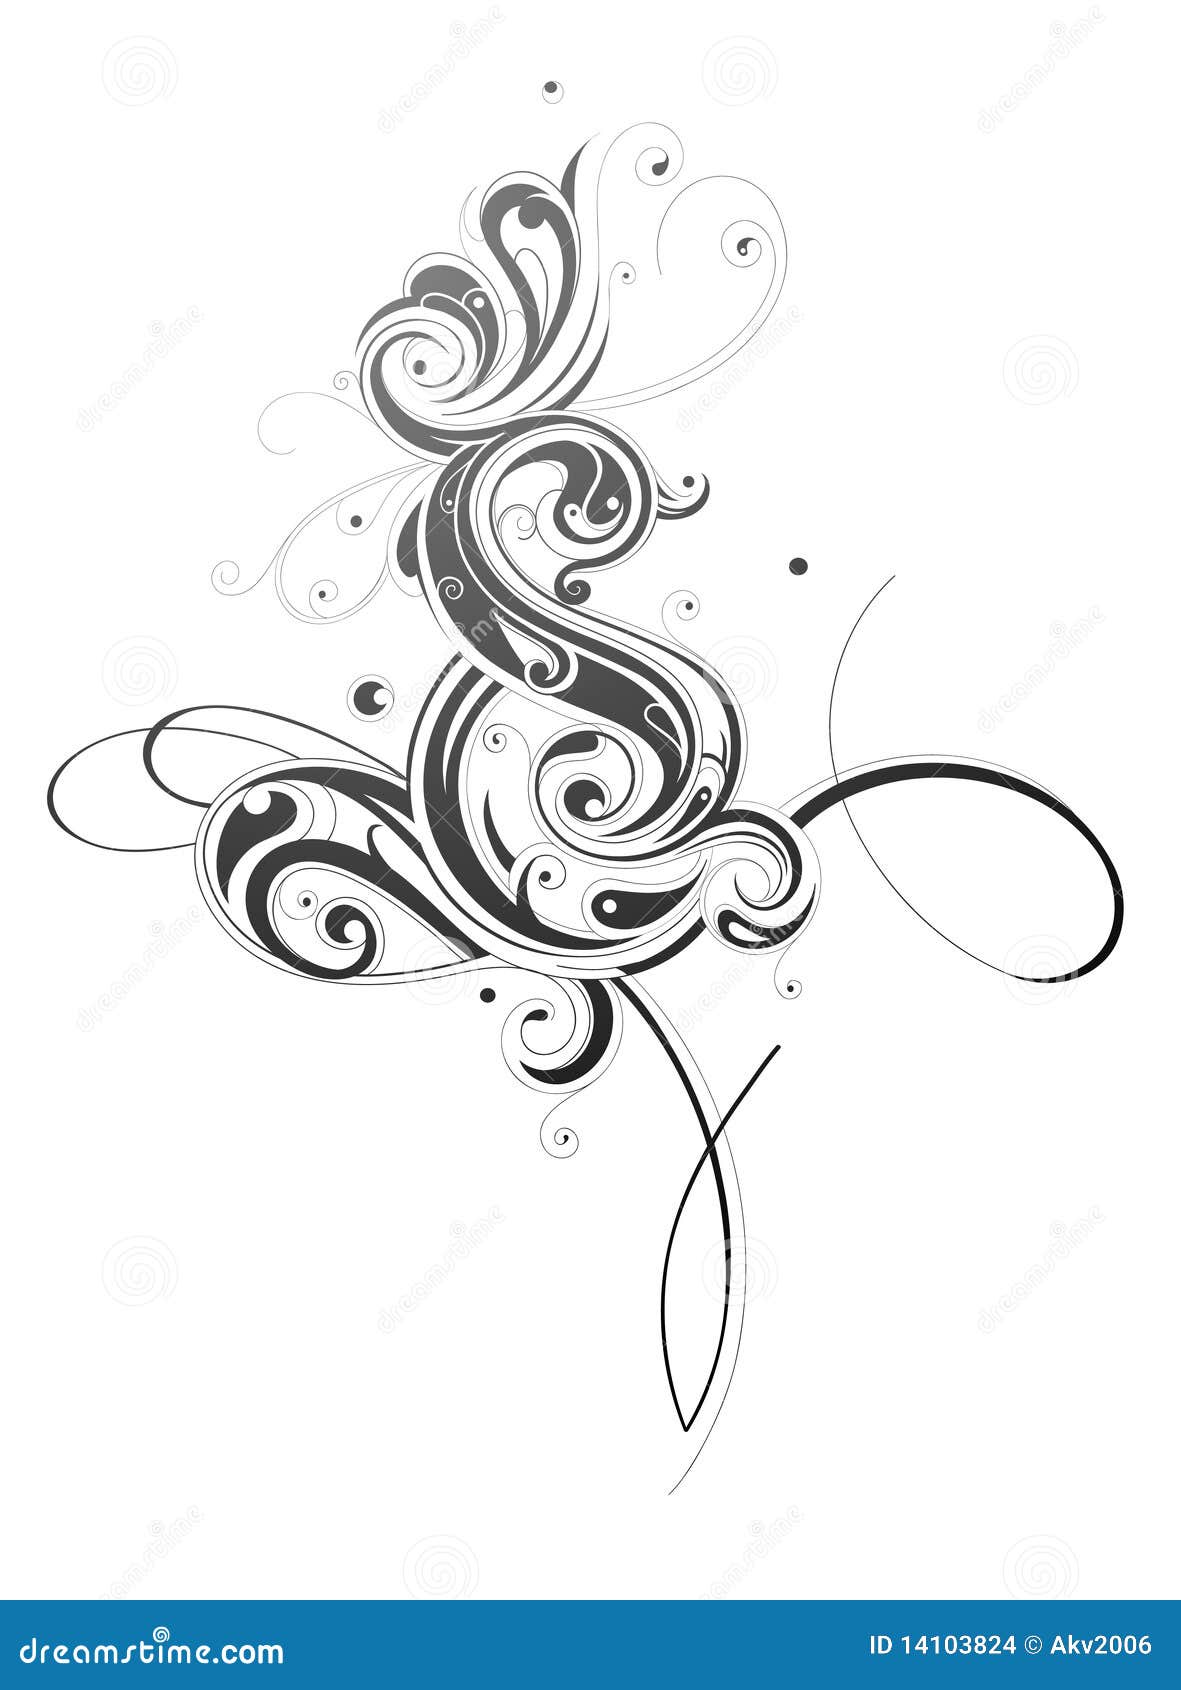 Artistic shape stock vector. Illustration of curls, background - 14103824